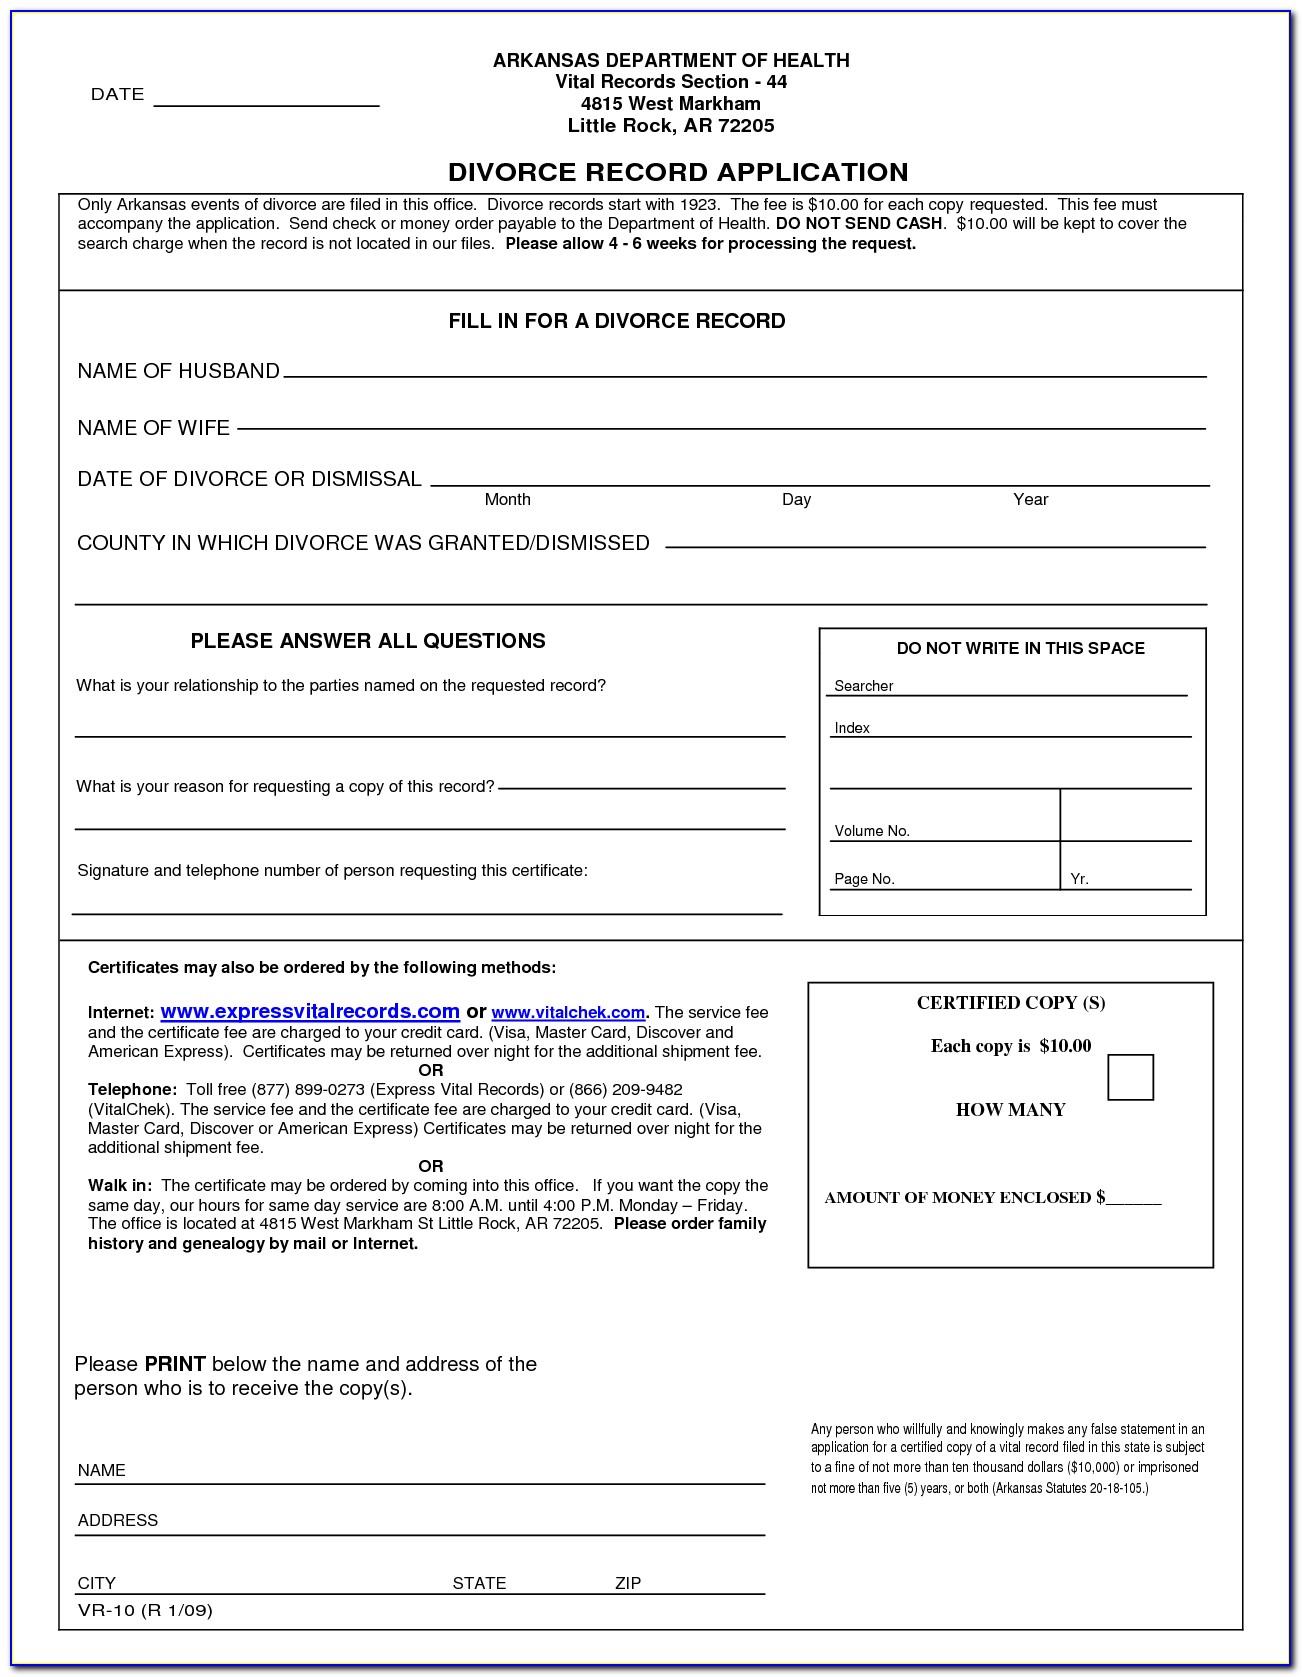 arkansas complaint for divorce form pdf form resume examples